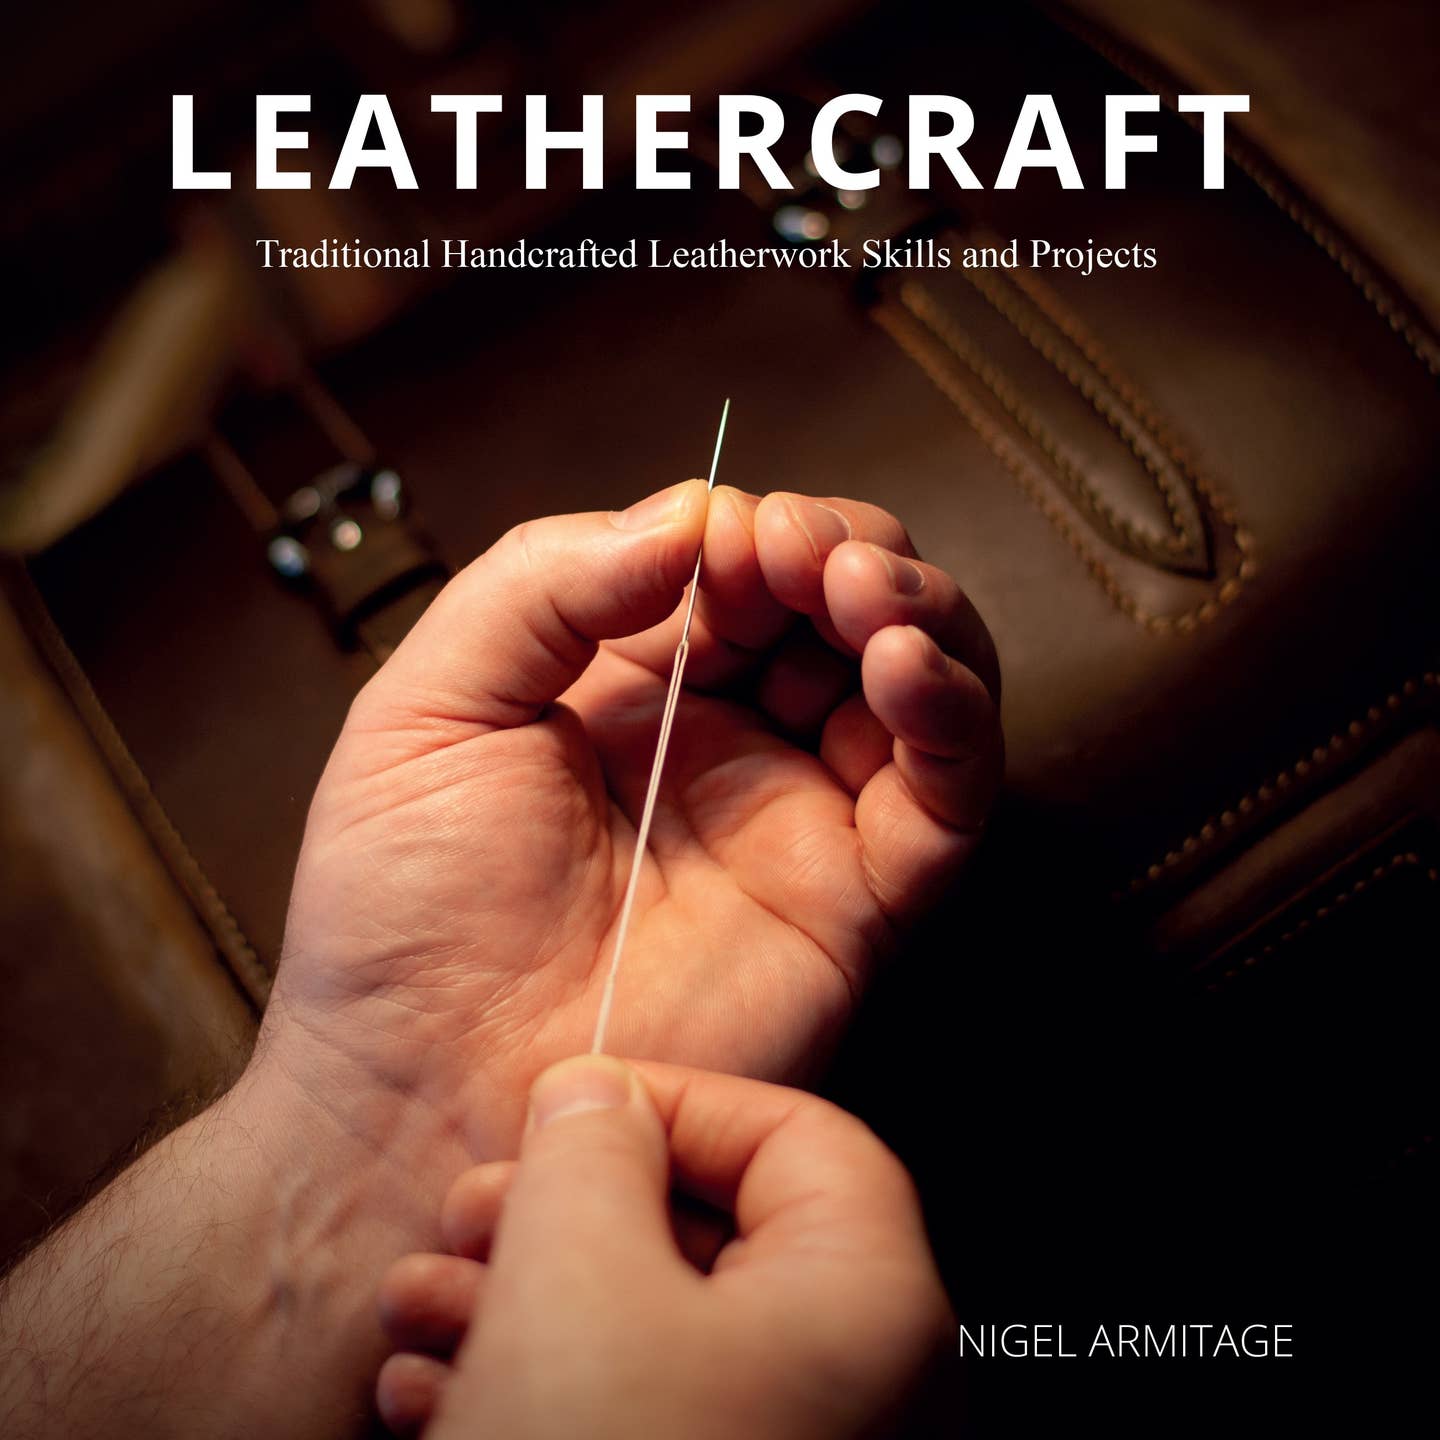 Leathercraft: Traditional Handcrafted Leatherwork Skills